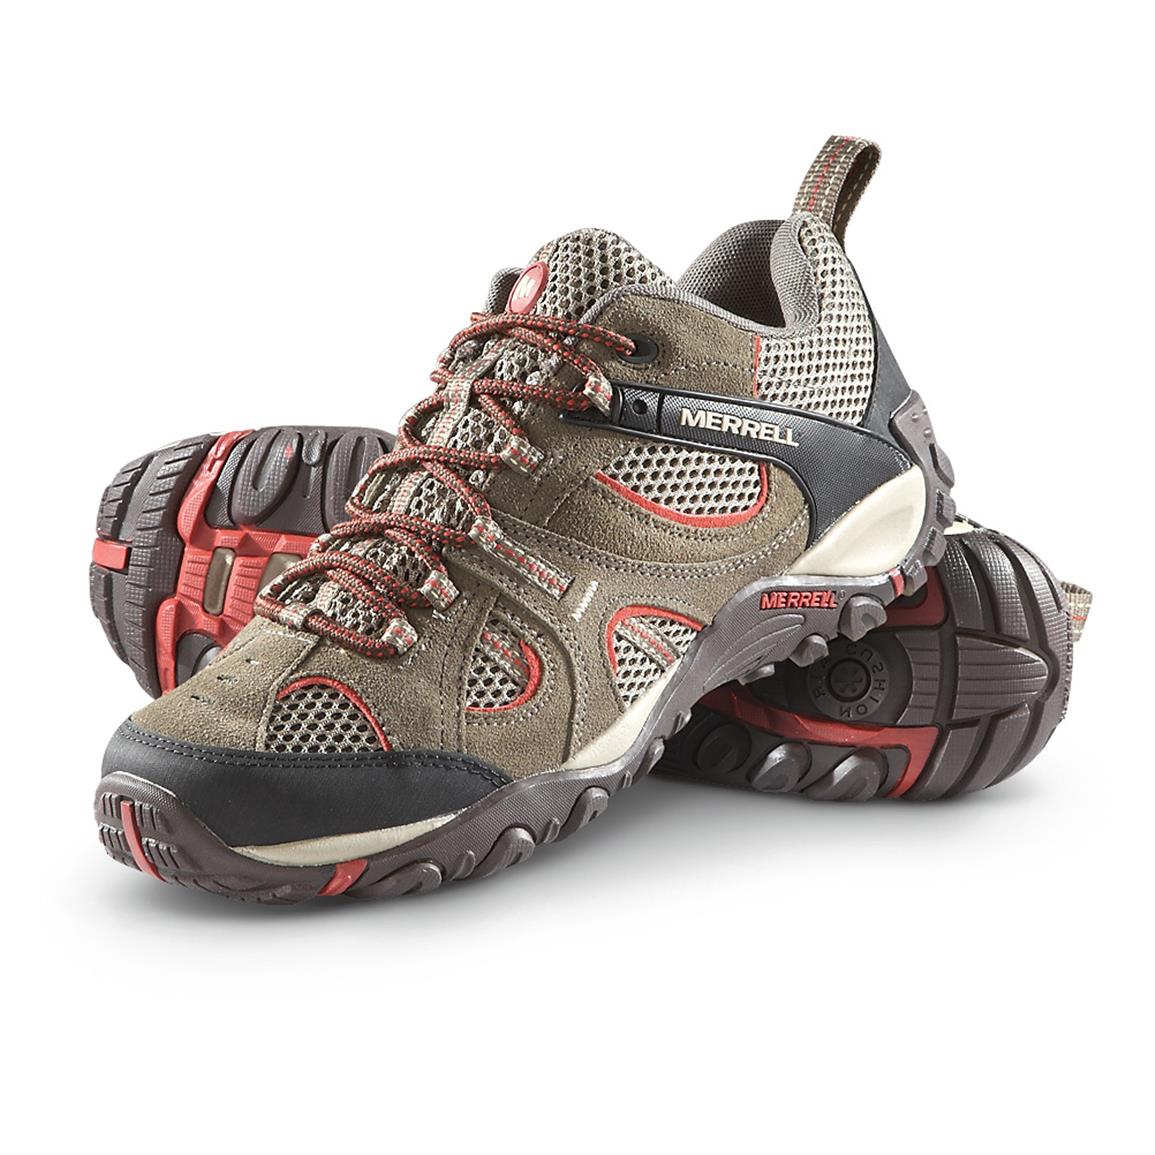 Merrell Men's Yokota Trail Low Hiking Shoes - 592528, Hiking Boots ...